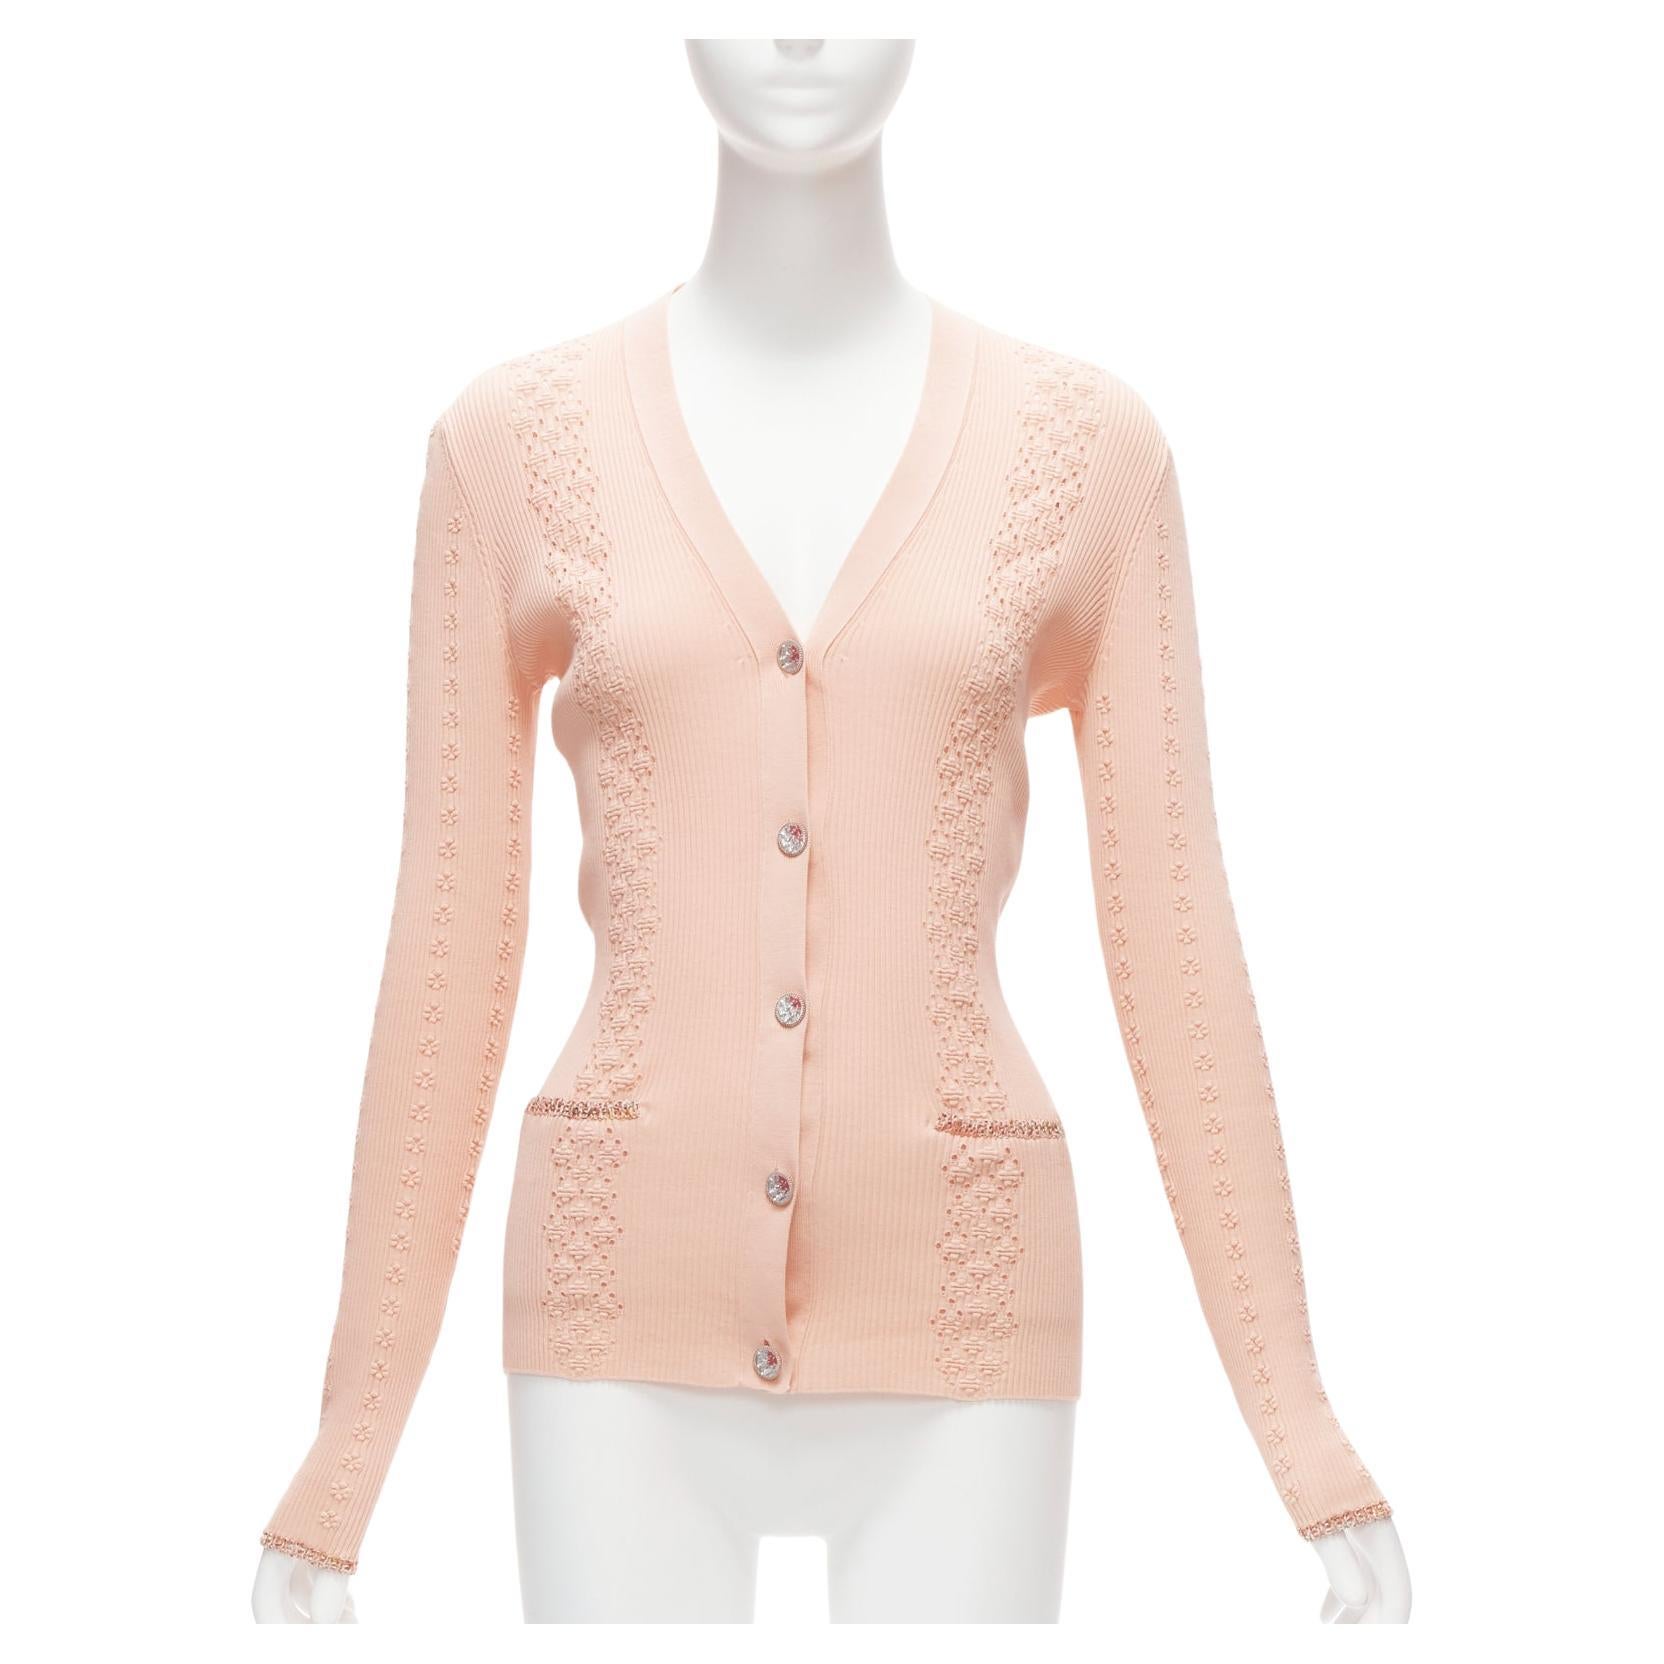 Karl Lagerfeld Chanel 17C Coco Cuba Pink Cotton Byzantine Cross Pointelle Knit Cardigan Sweater